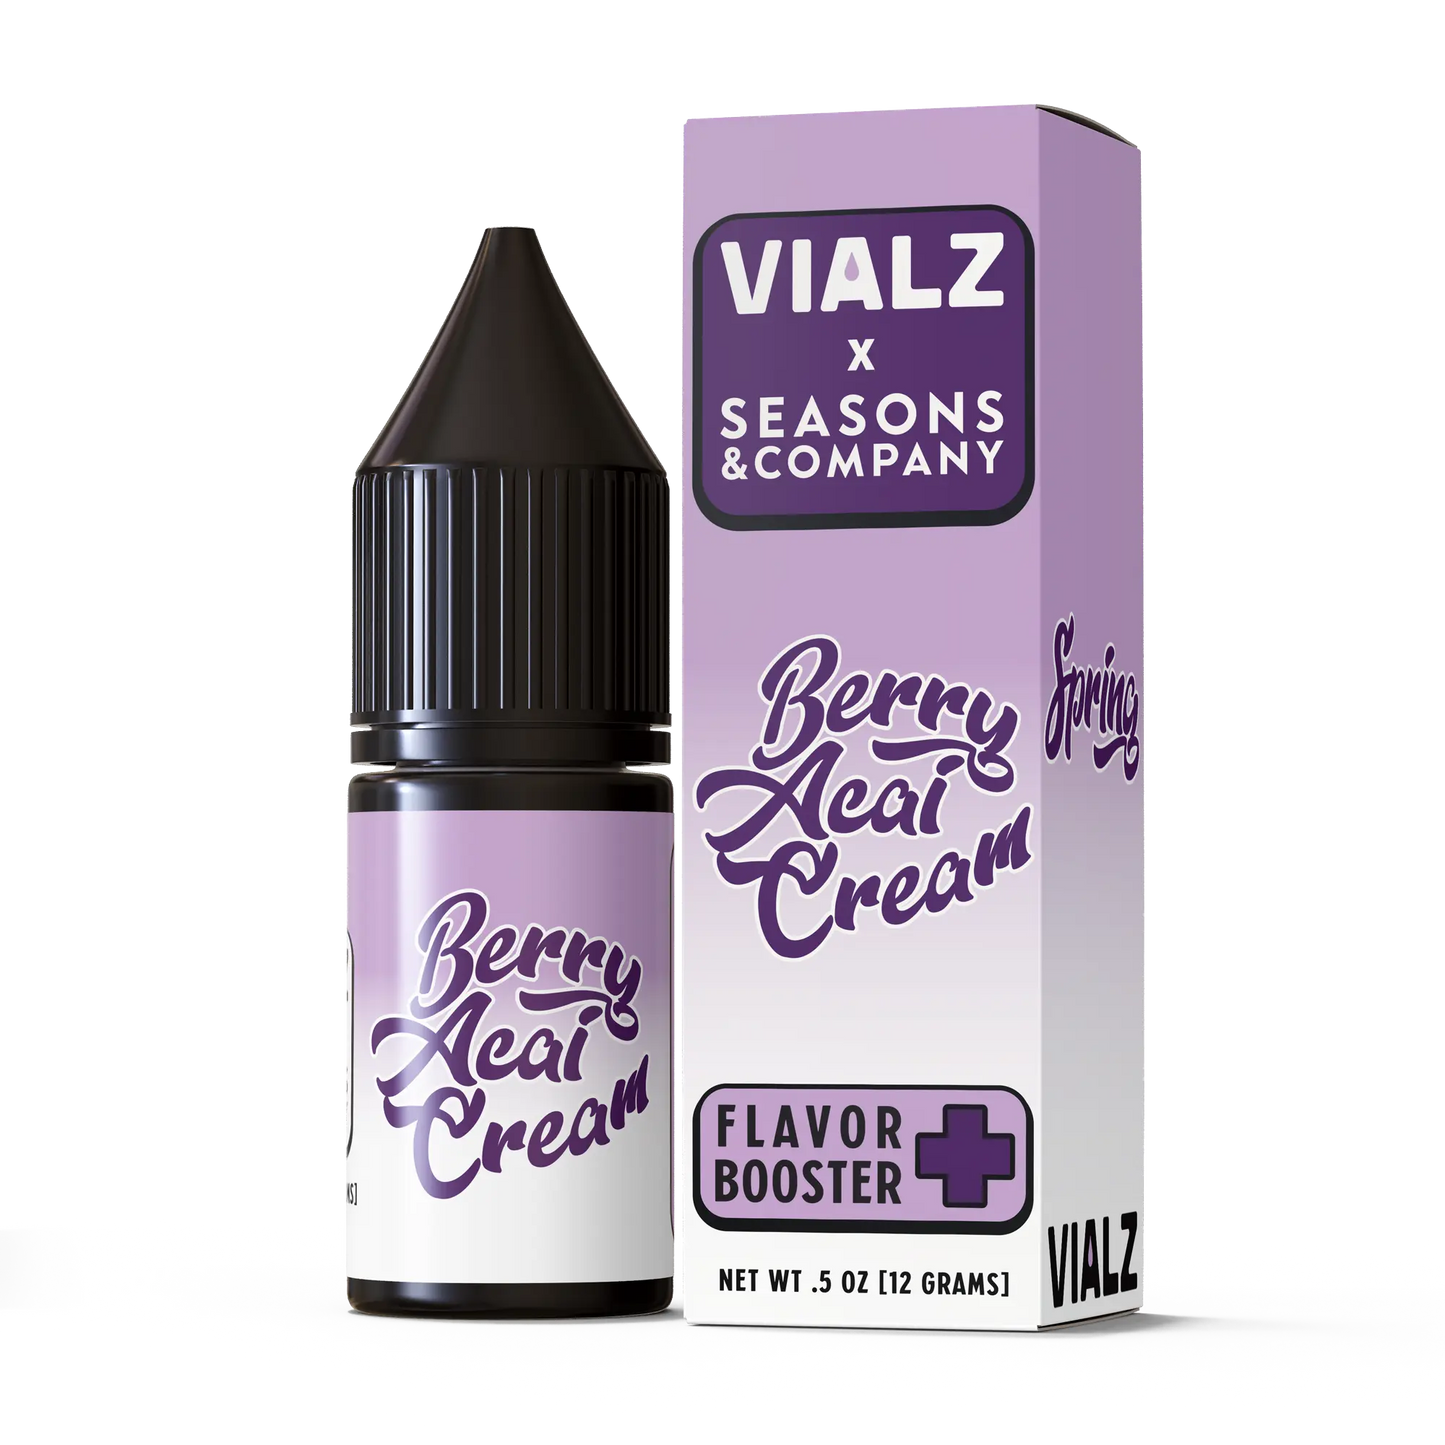 Vialz Berry Acai Cream (Flavor Booster)